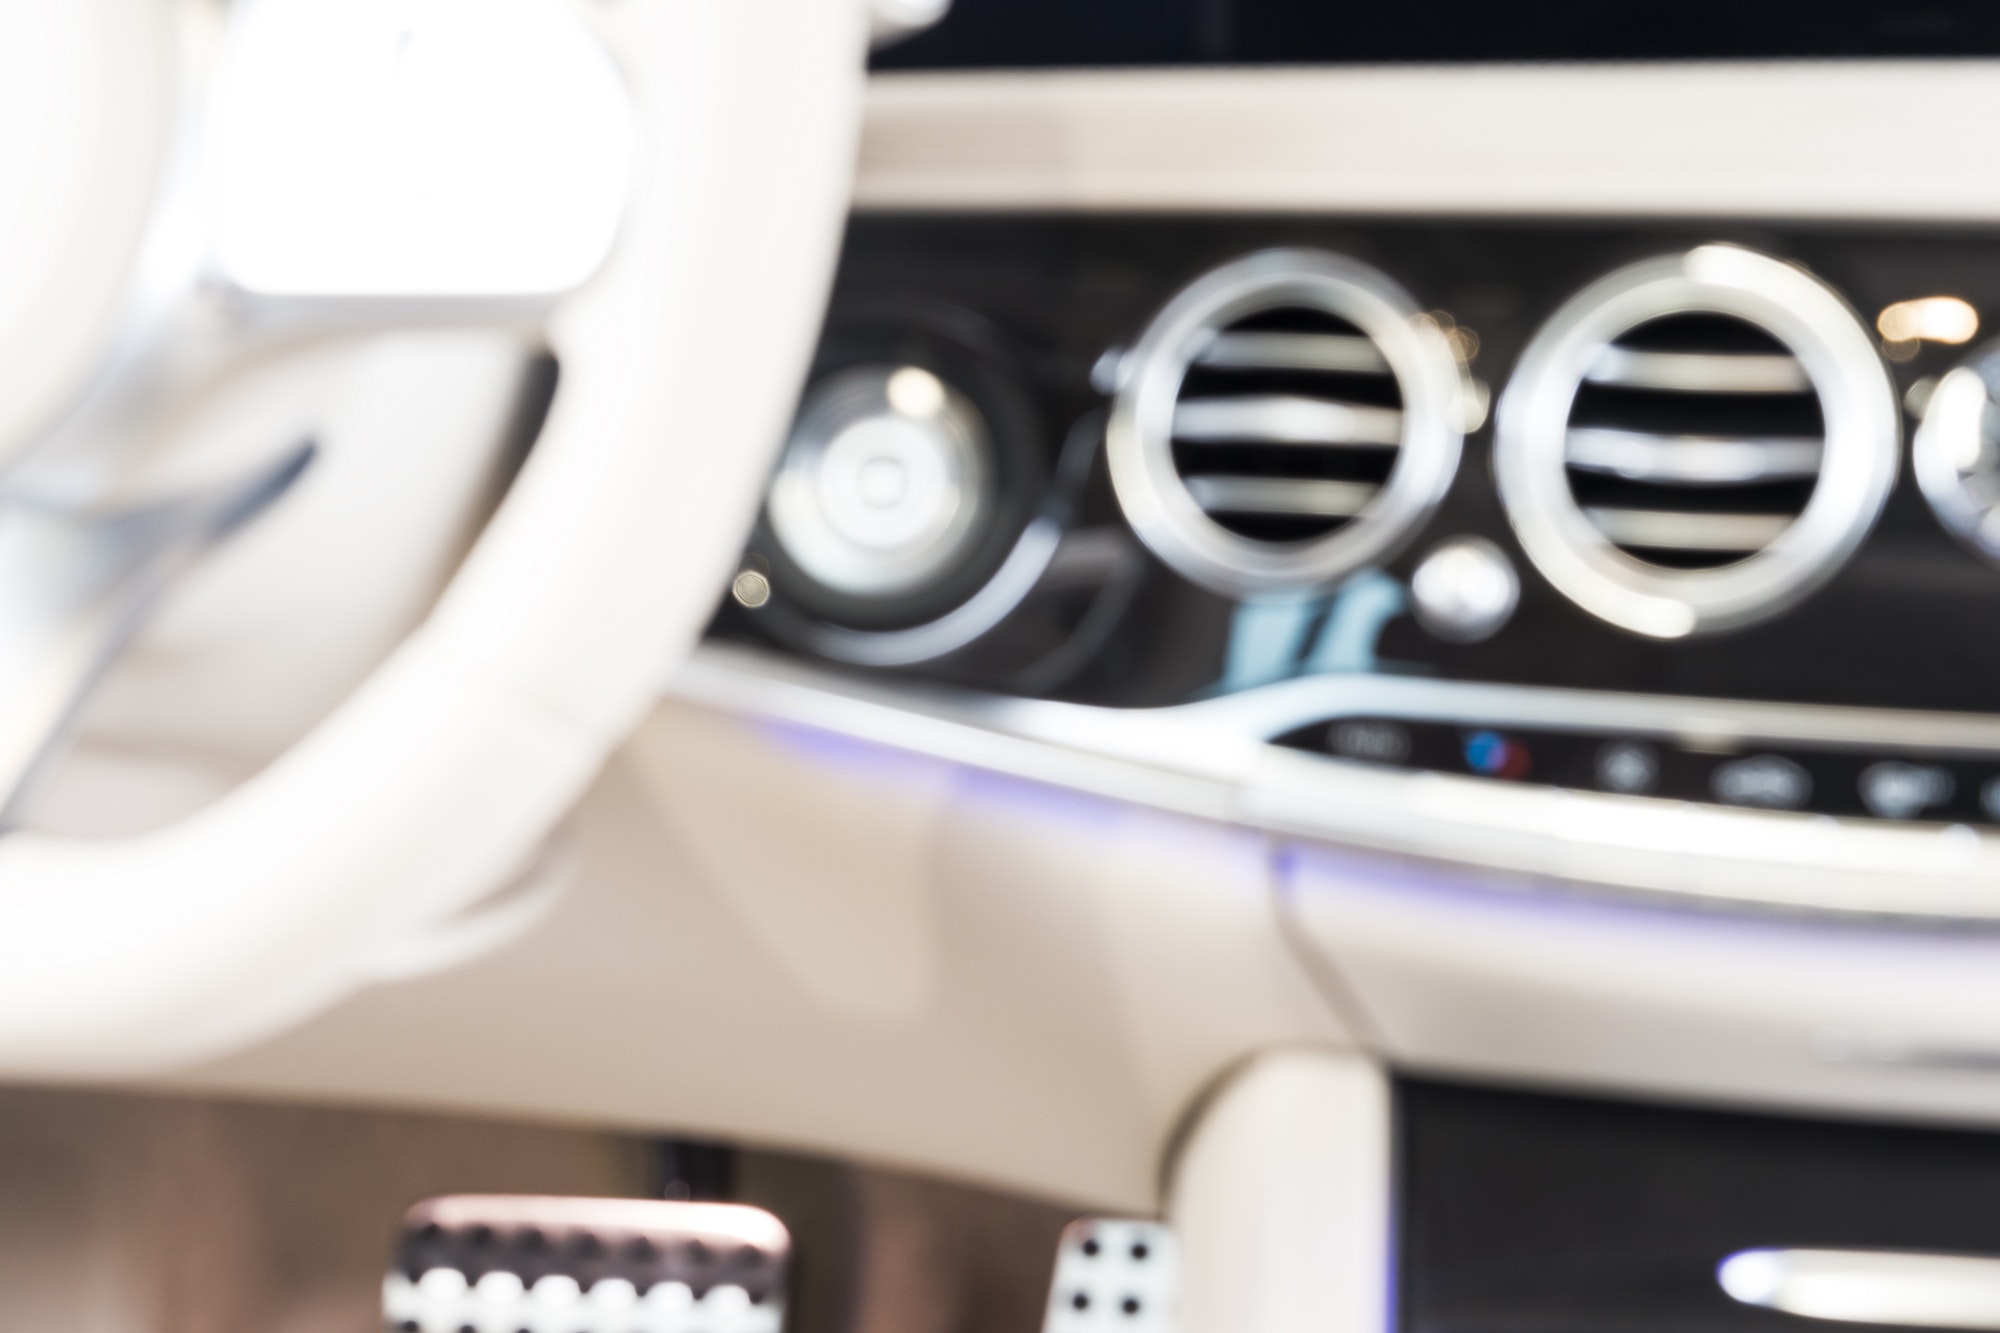 Blurred image of modern car interior